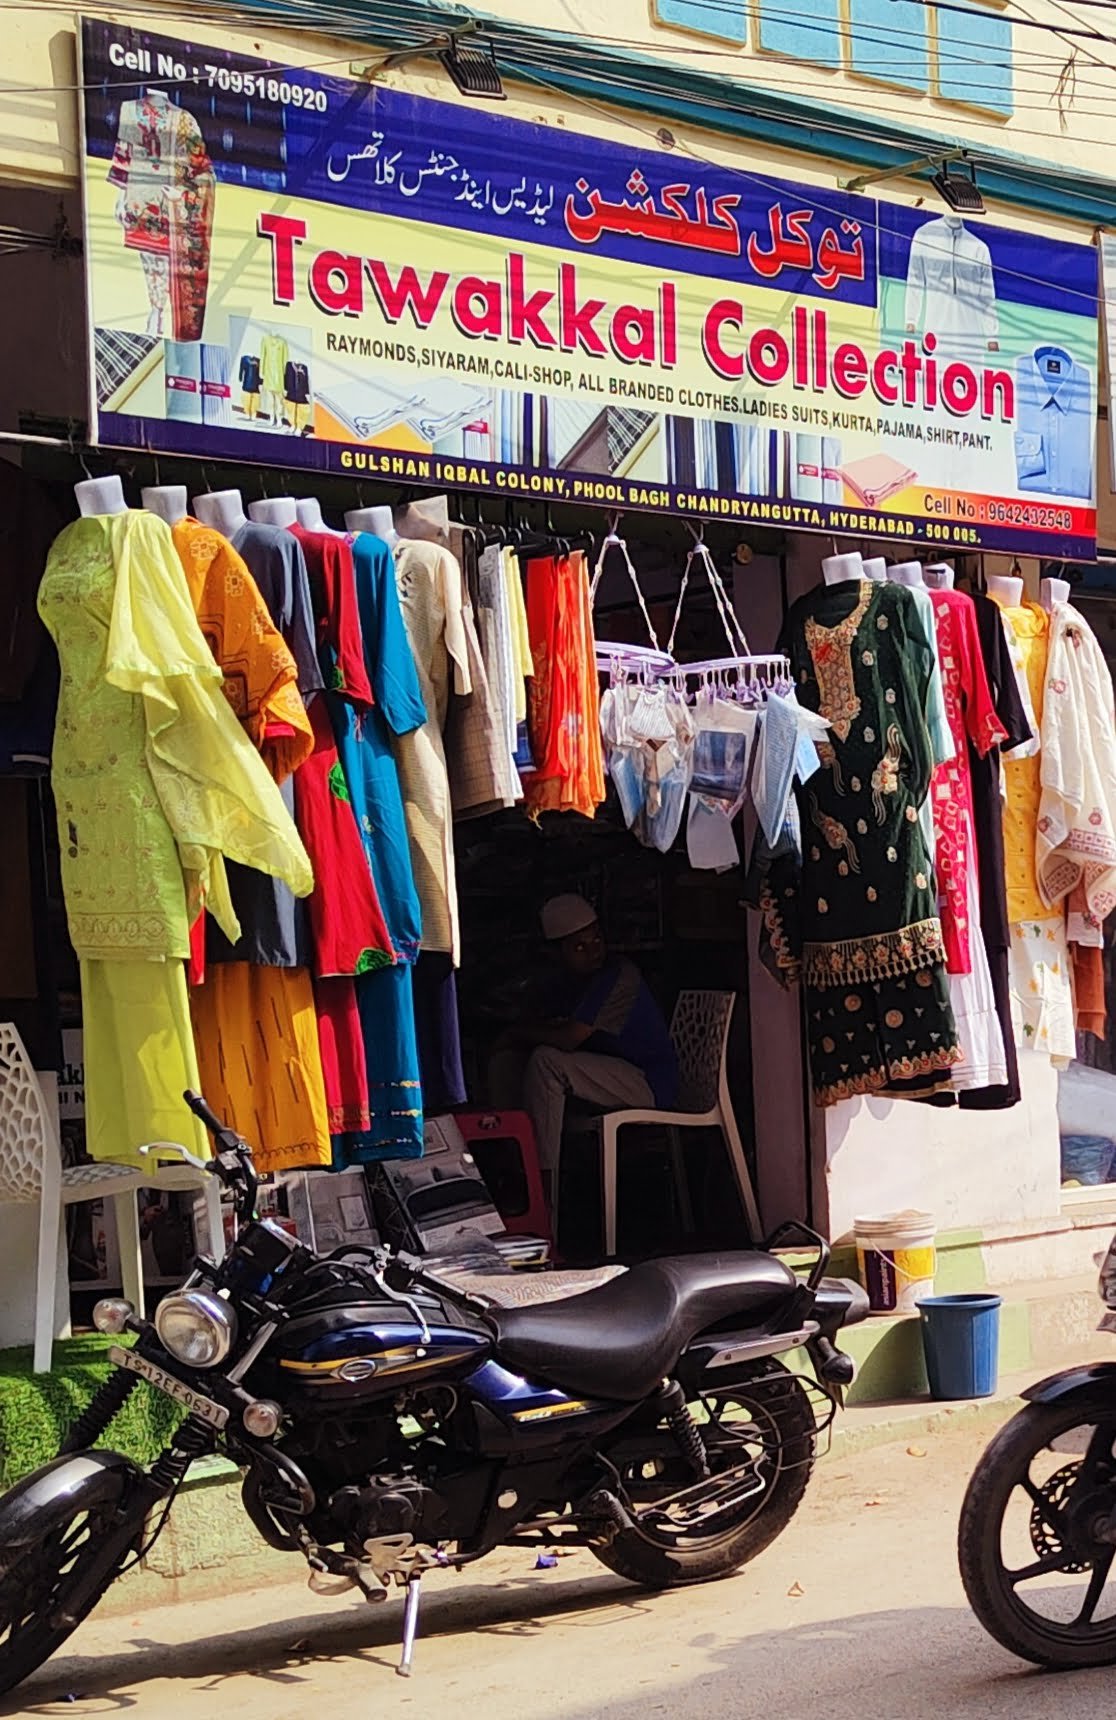 Tawakkal Collection in Ghulsan Iqbal Colony